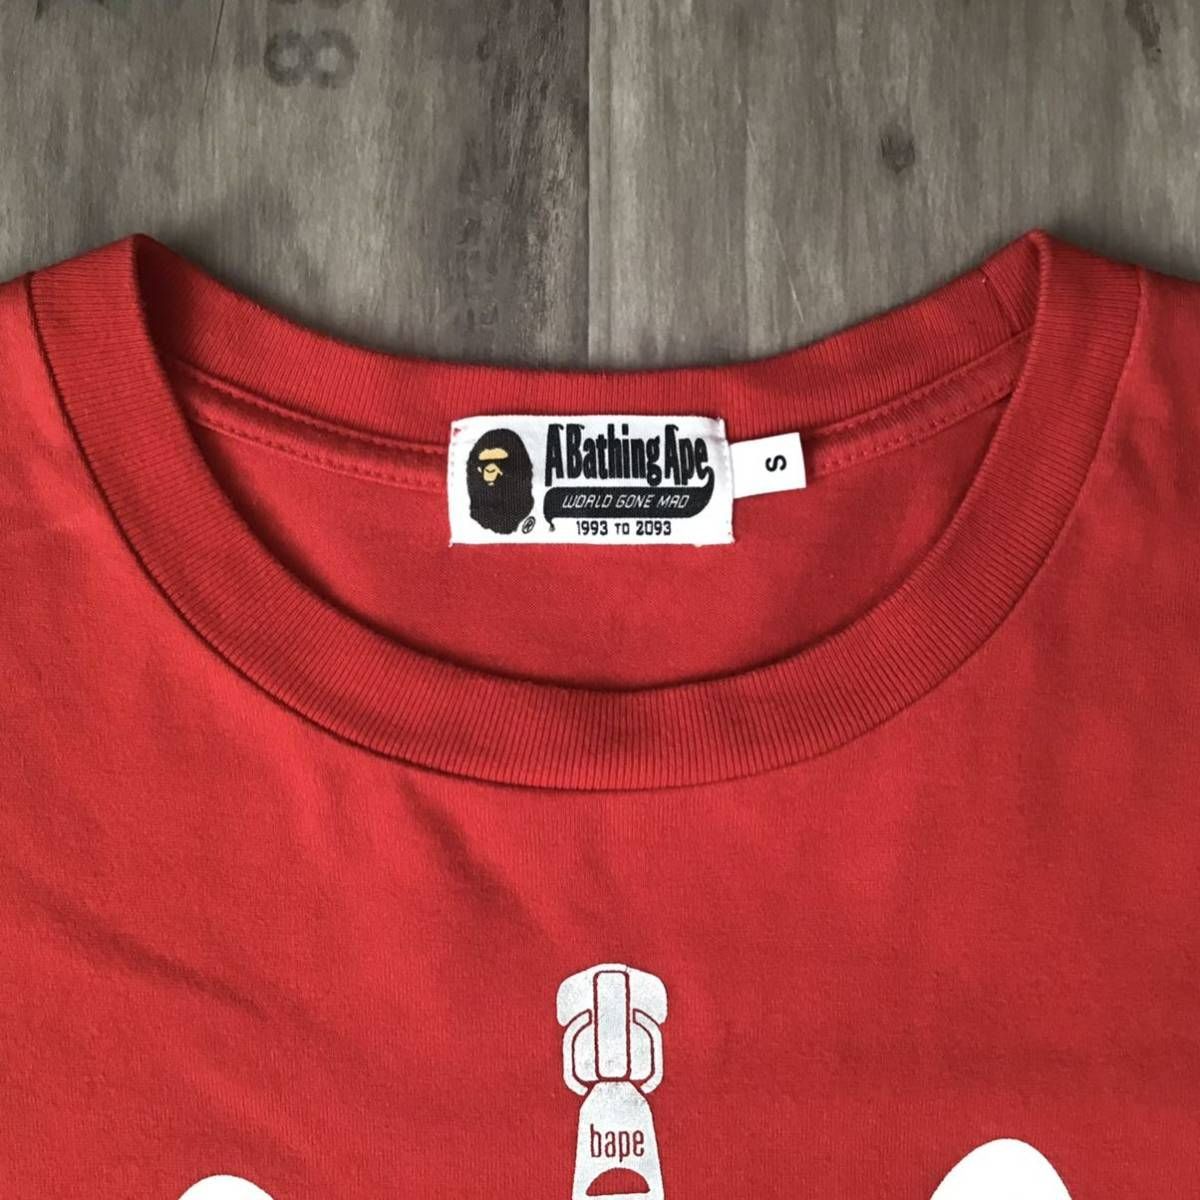 BAPE Red camo シャーク Tシャツ Sサイズ a bathing ape エイプ ベイプ 